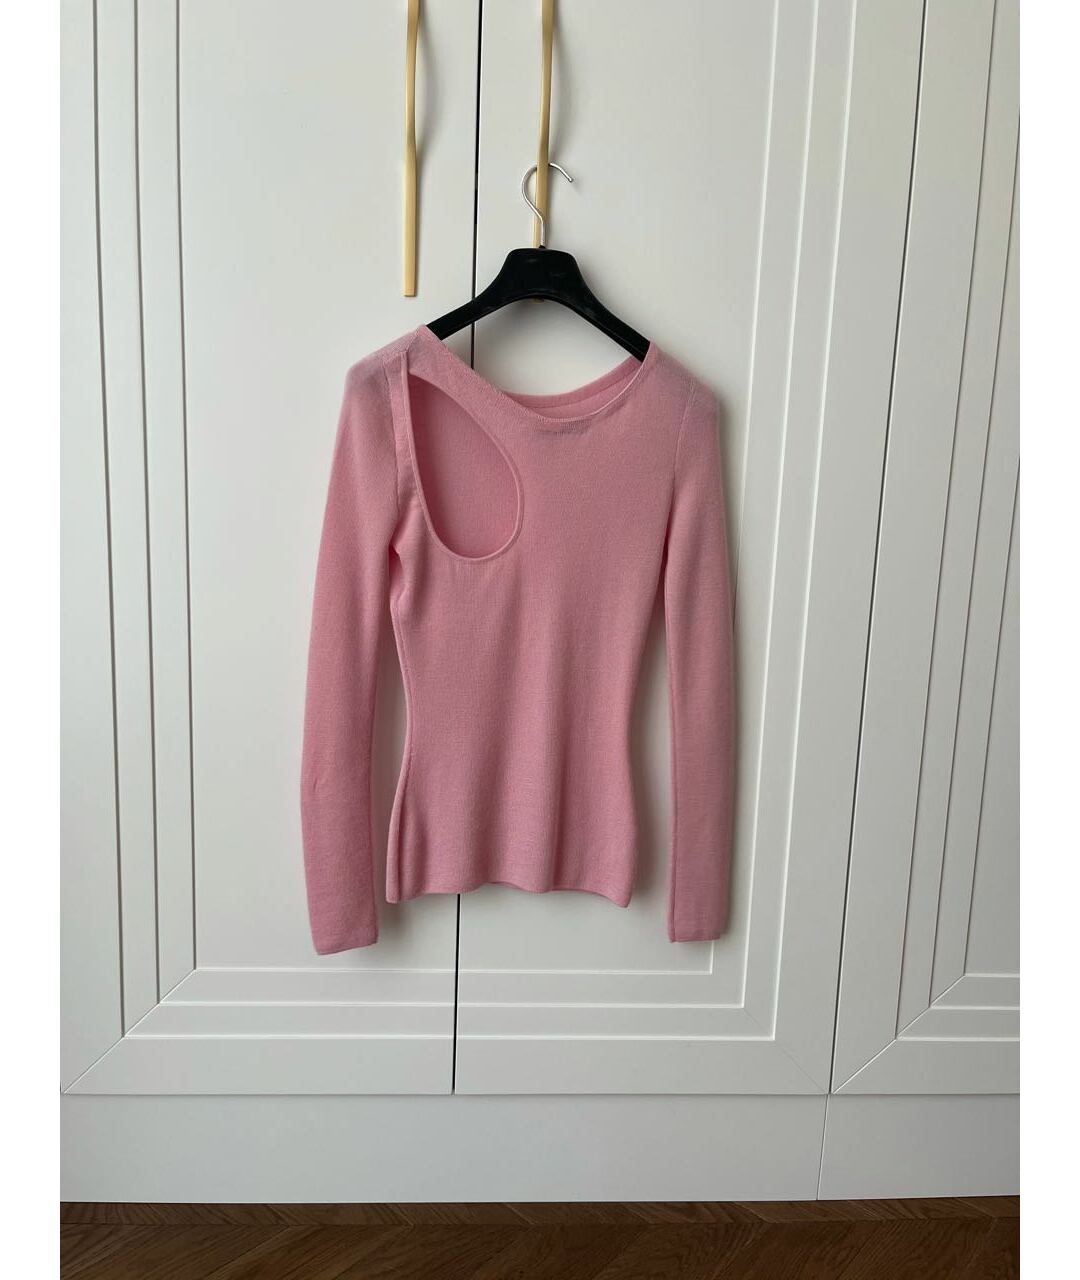 CHRISTIAN DIOR PRE-OWNED Розовый кашемировый джемпер / свитер, фото 2